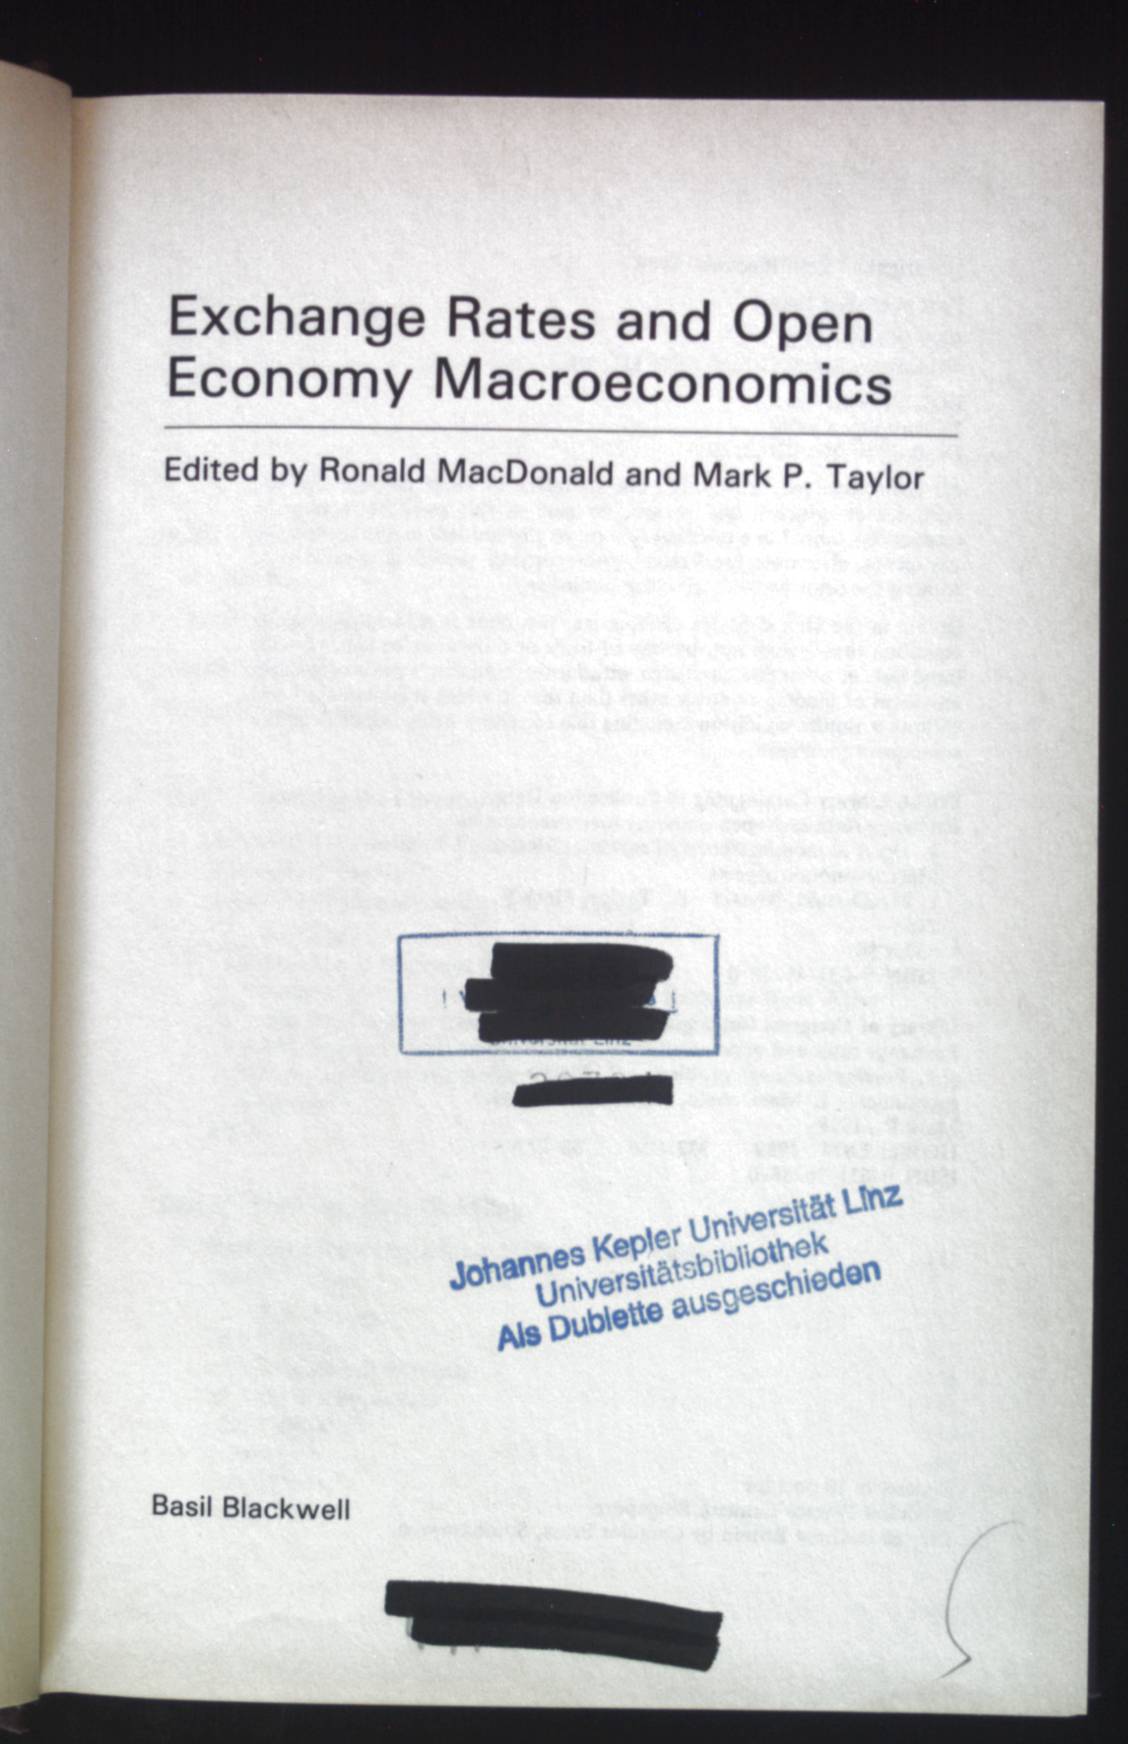 Exchange Rates and Open Economy Macroeconomics. - Taylor, Mark P. and Ronald MacDonald